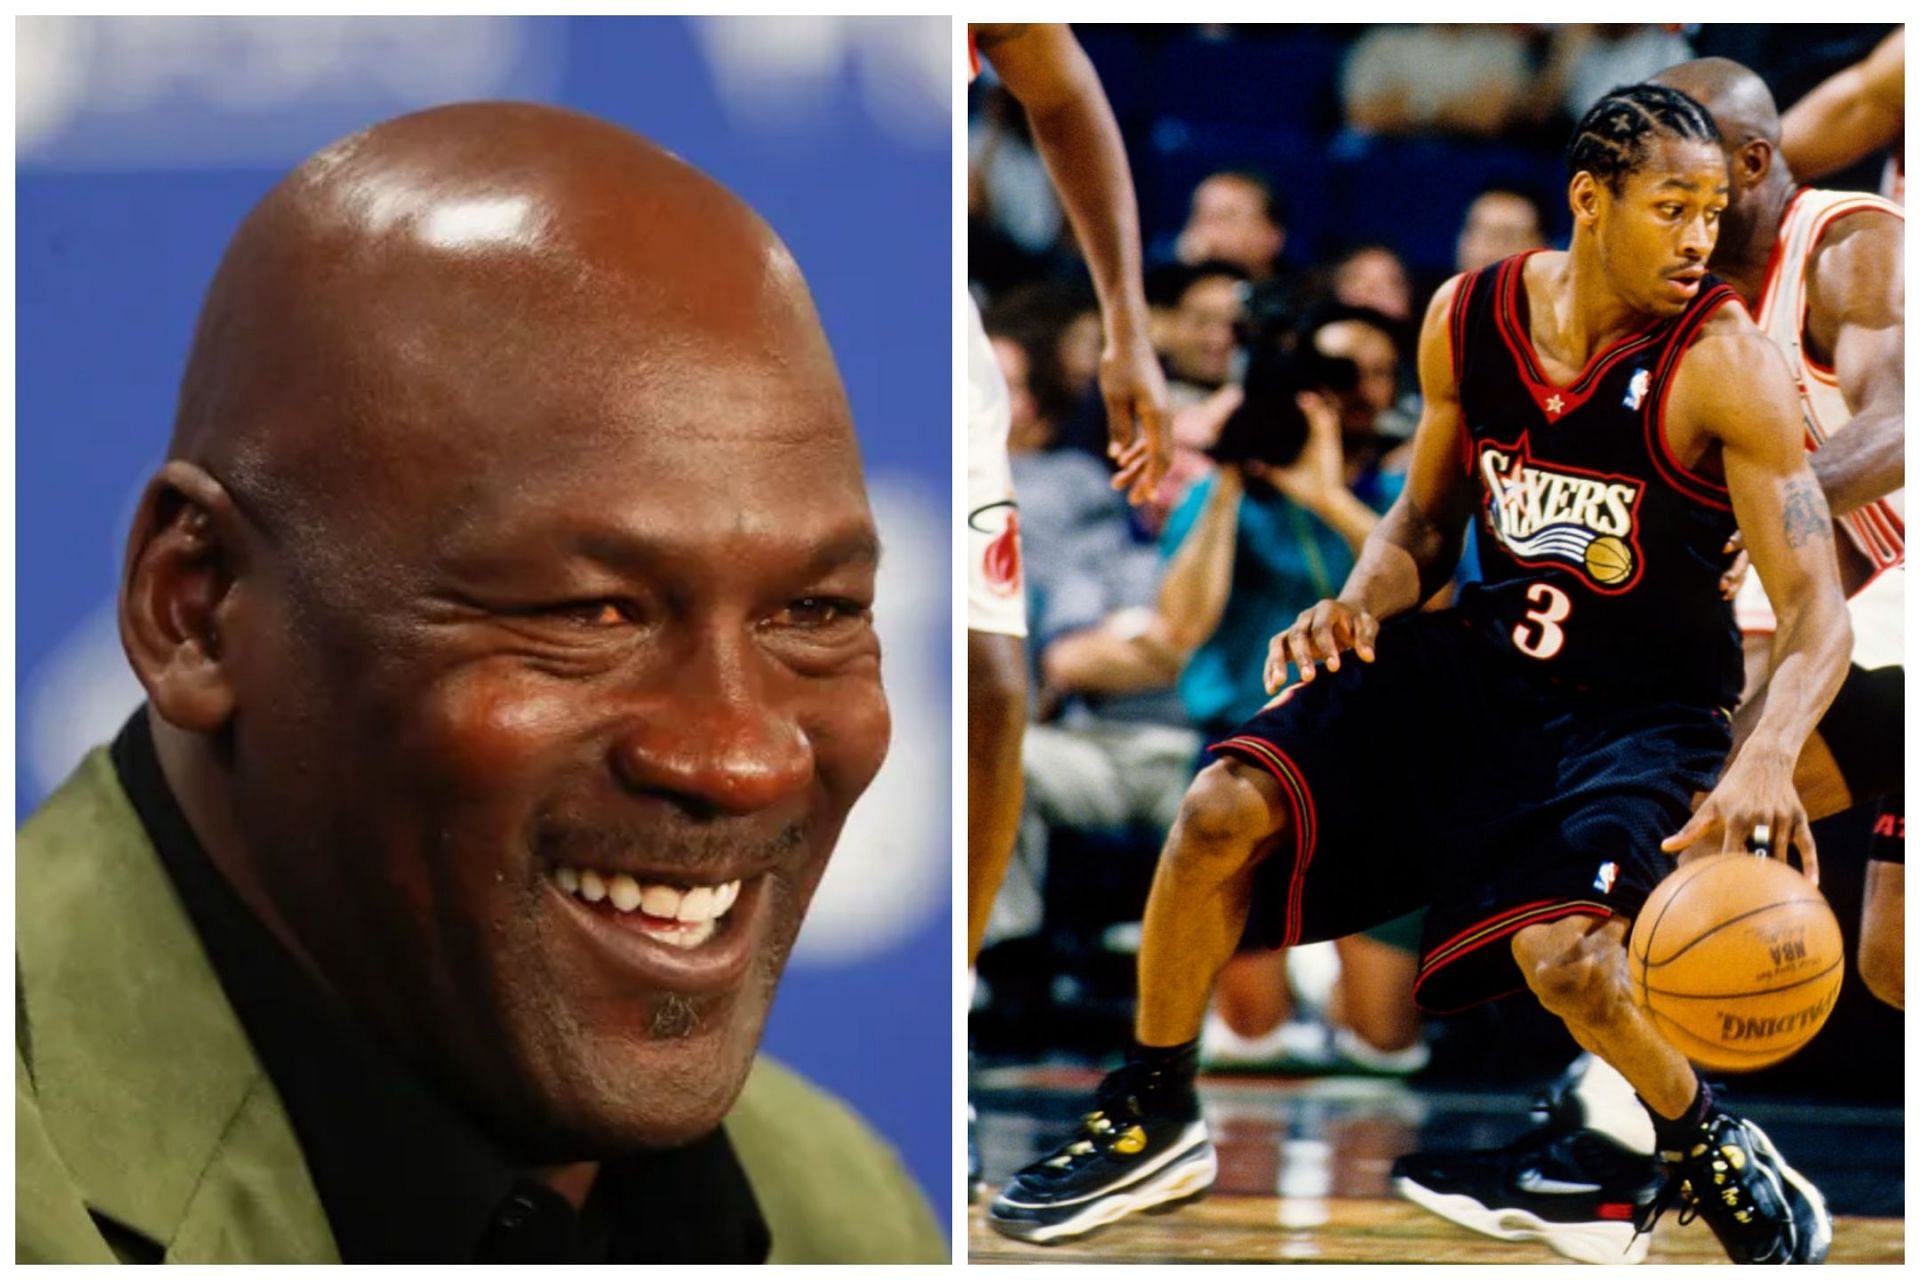 NBA legends Michael Jordan (left) and Allen Iverson (right) had impressive debuts at Madison Square Garden in New York